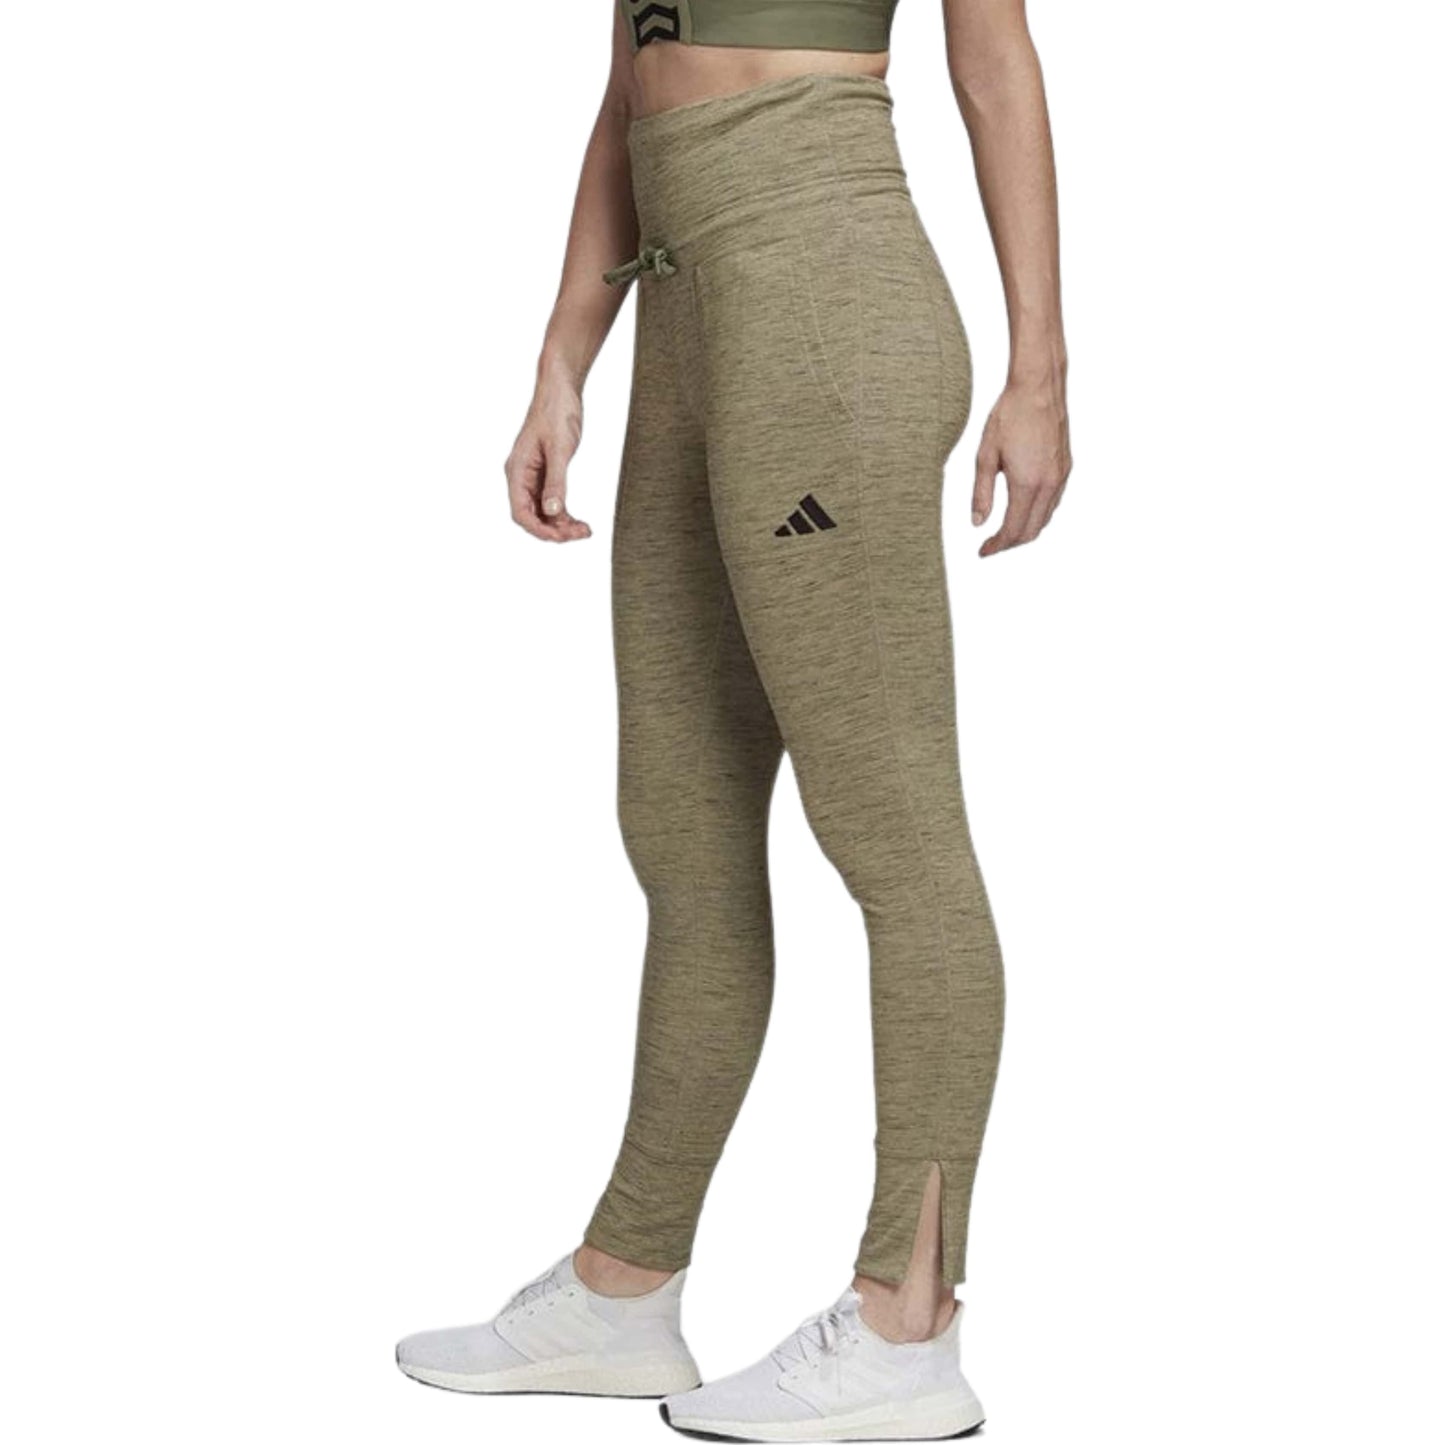 ADIDAS Womens Bottoms S / Green ADIDAS - Women's jogging Pant